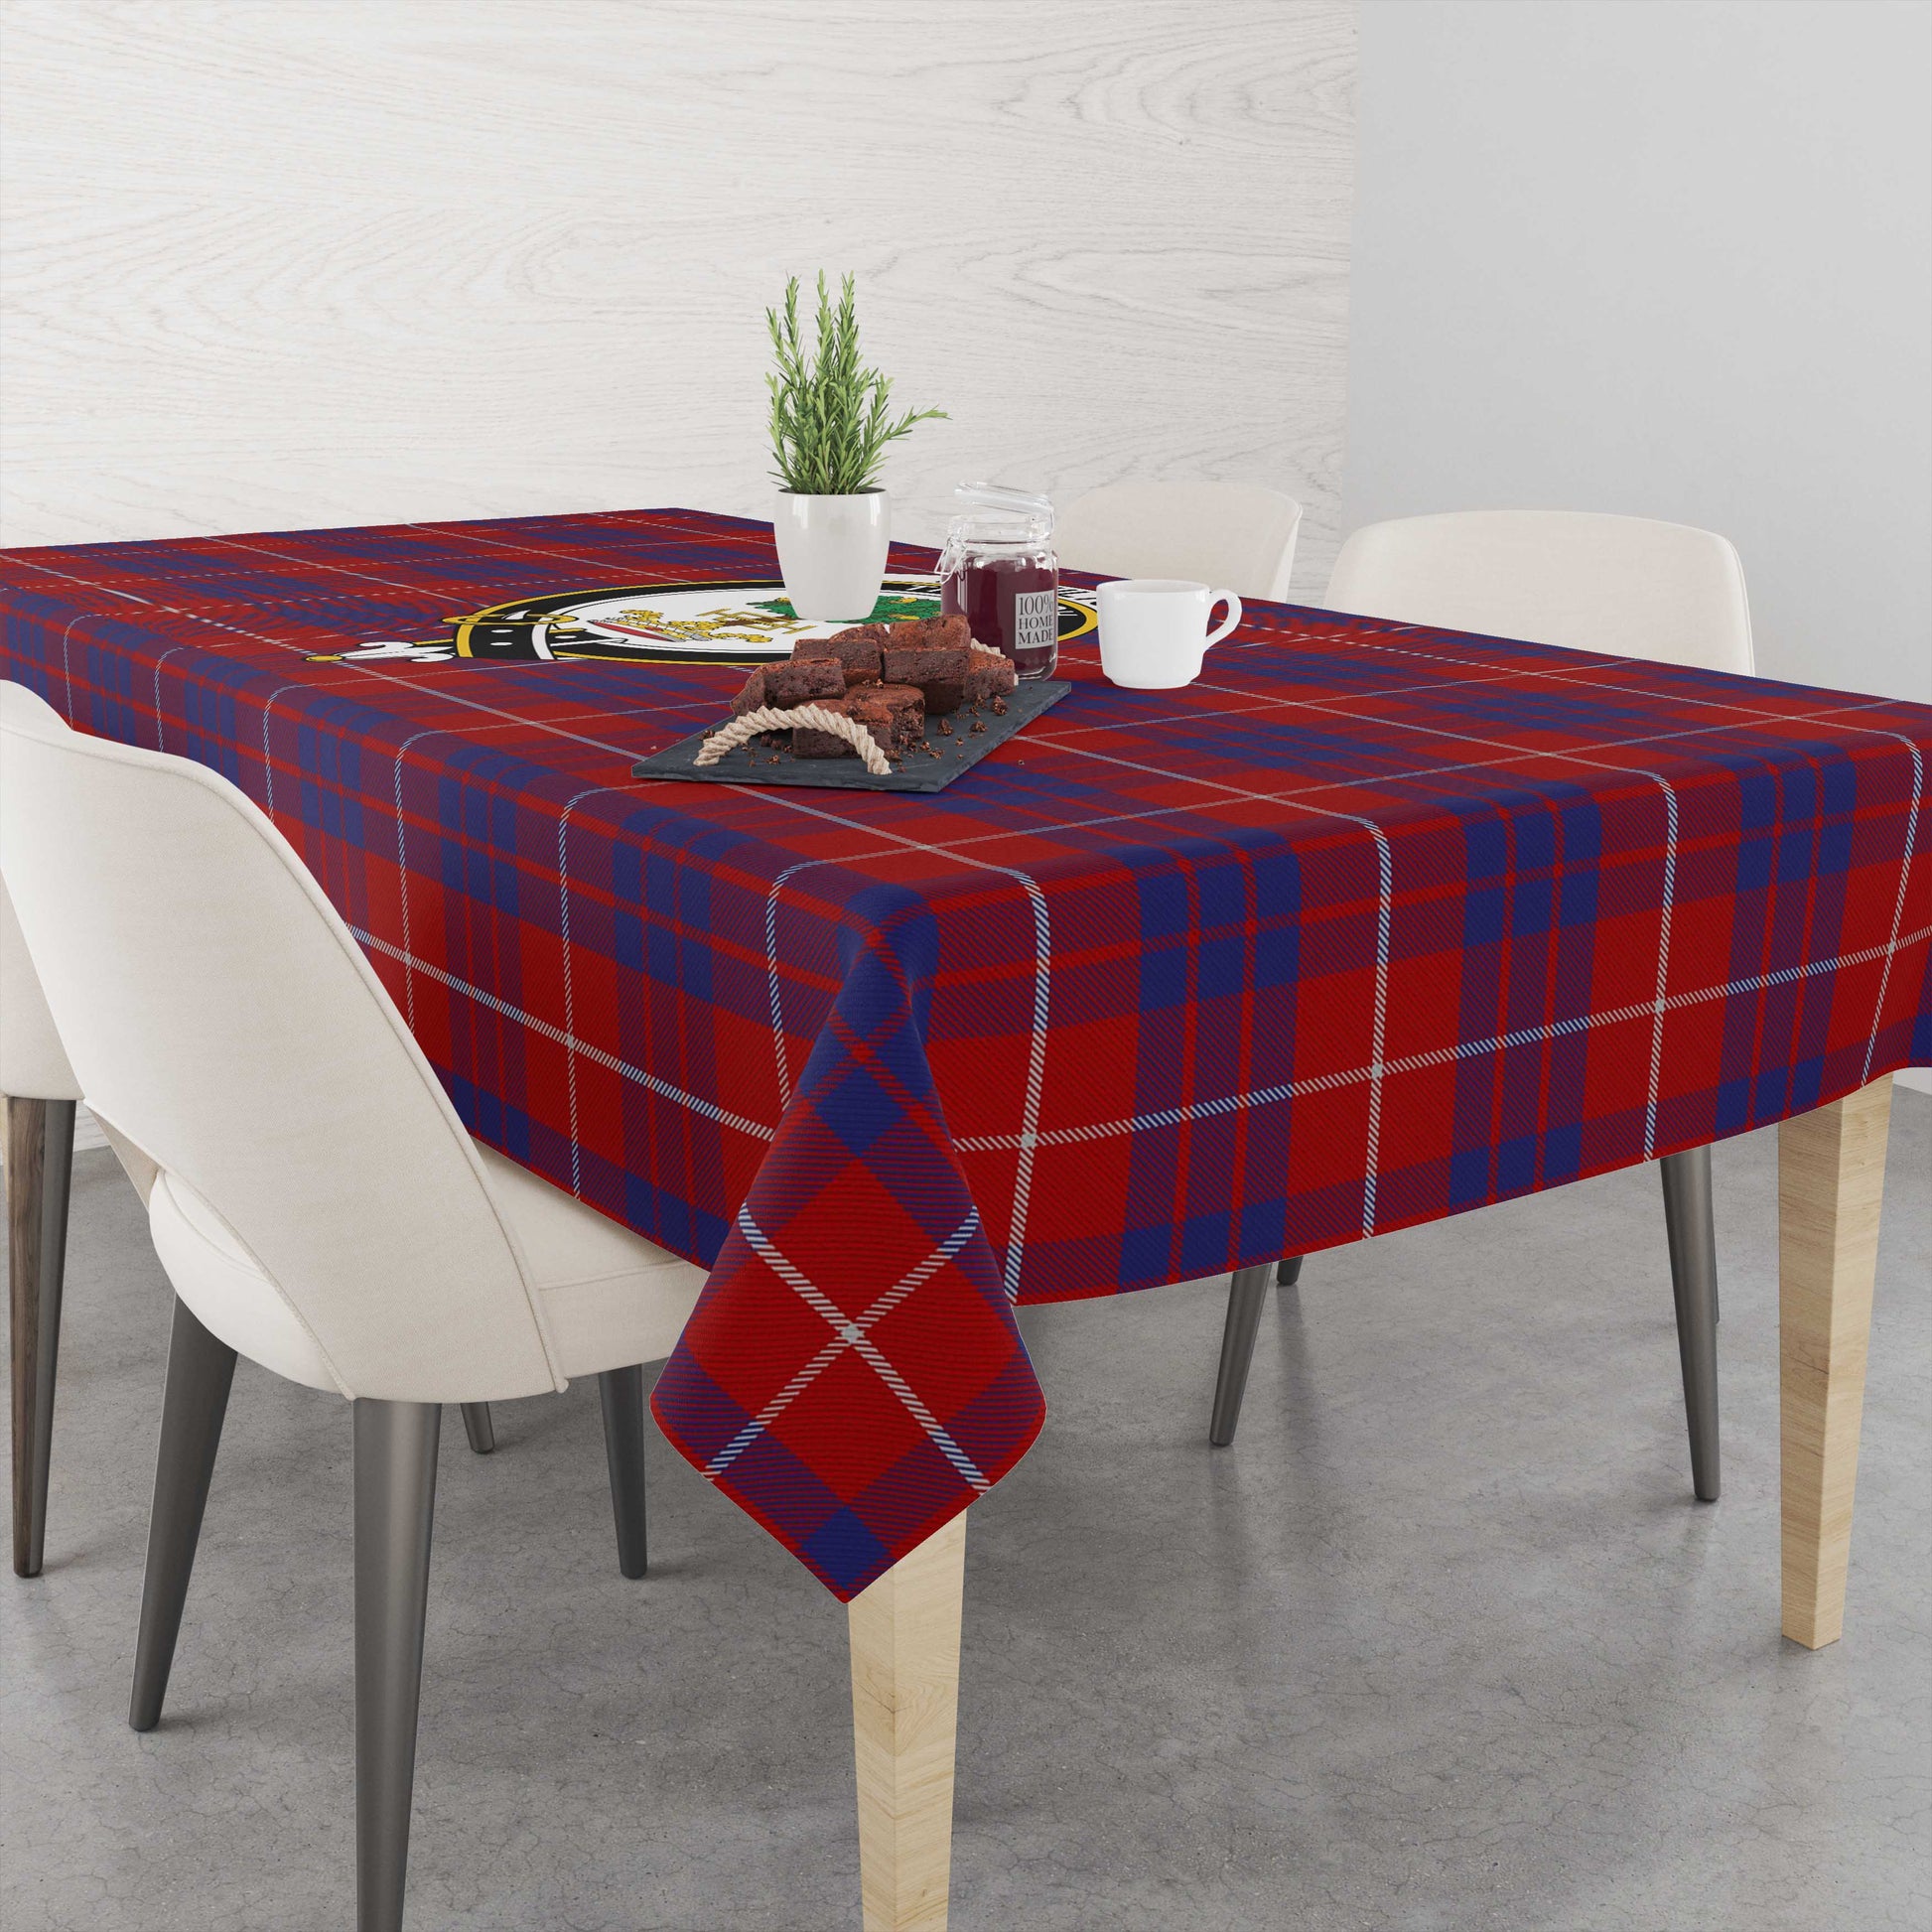 hamilton-tatan-tablecloth-with-family-crest